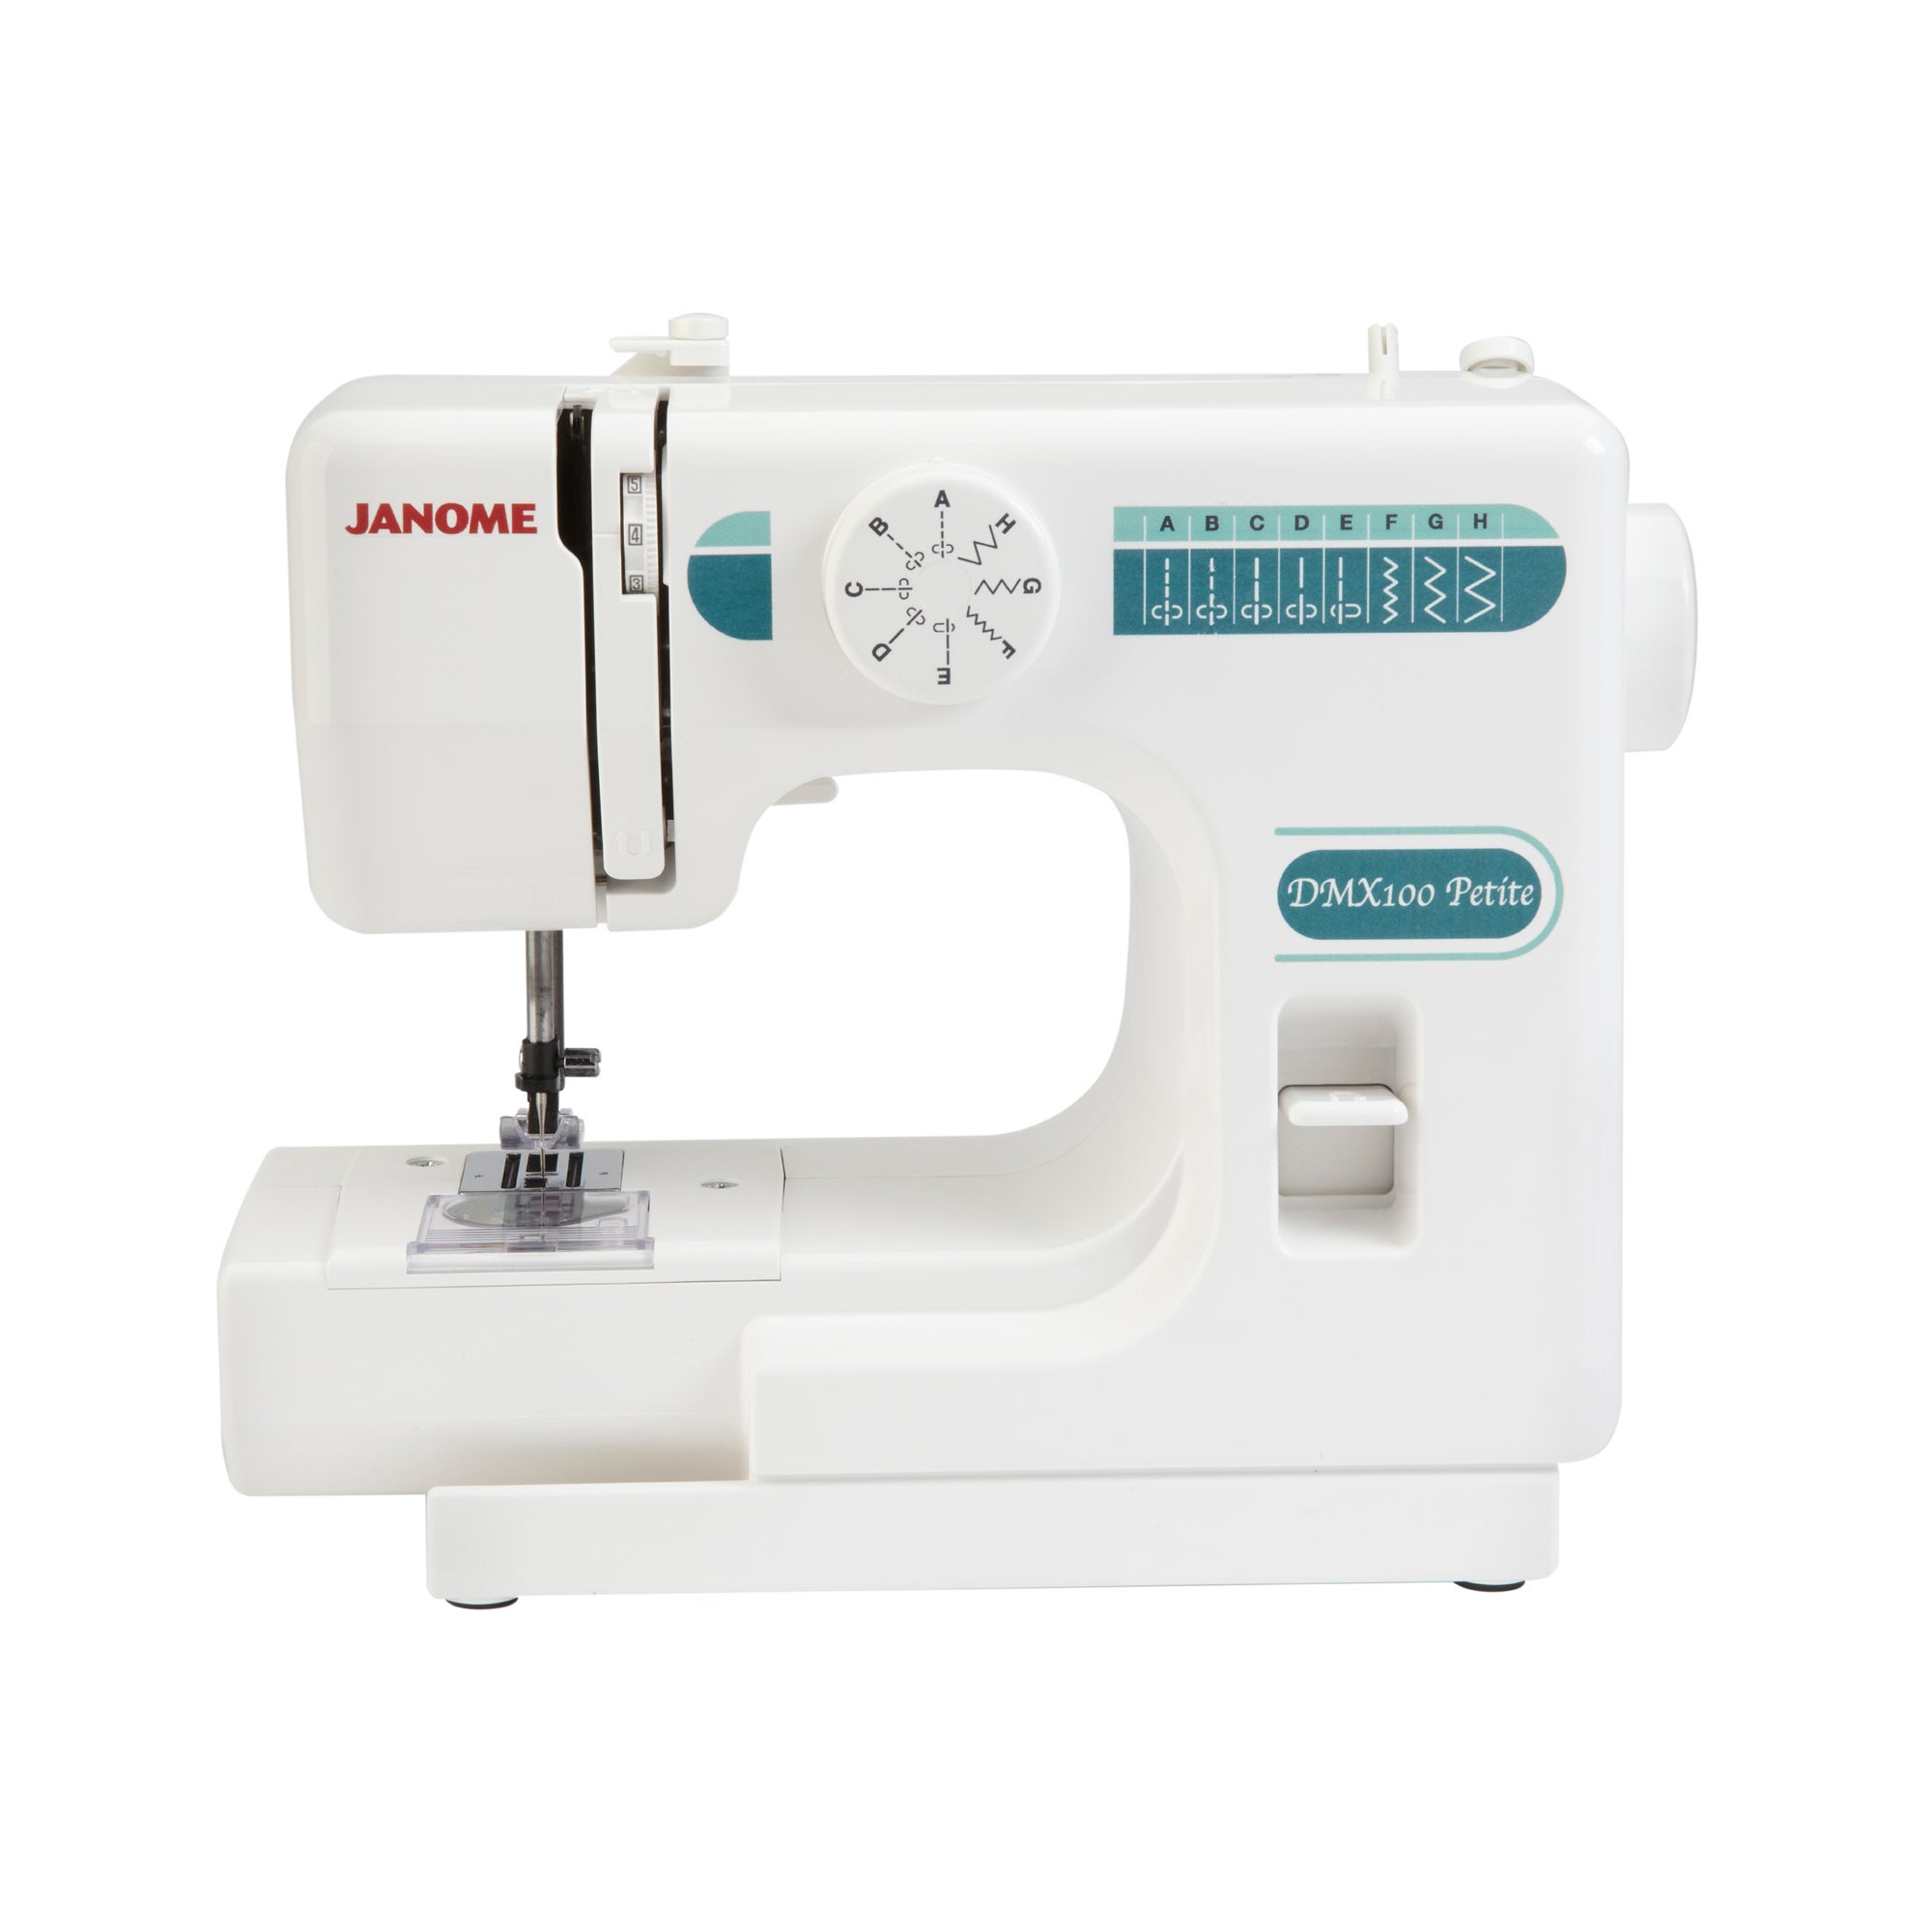 Janome DMX100 Petite Sewing Machine White